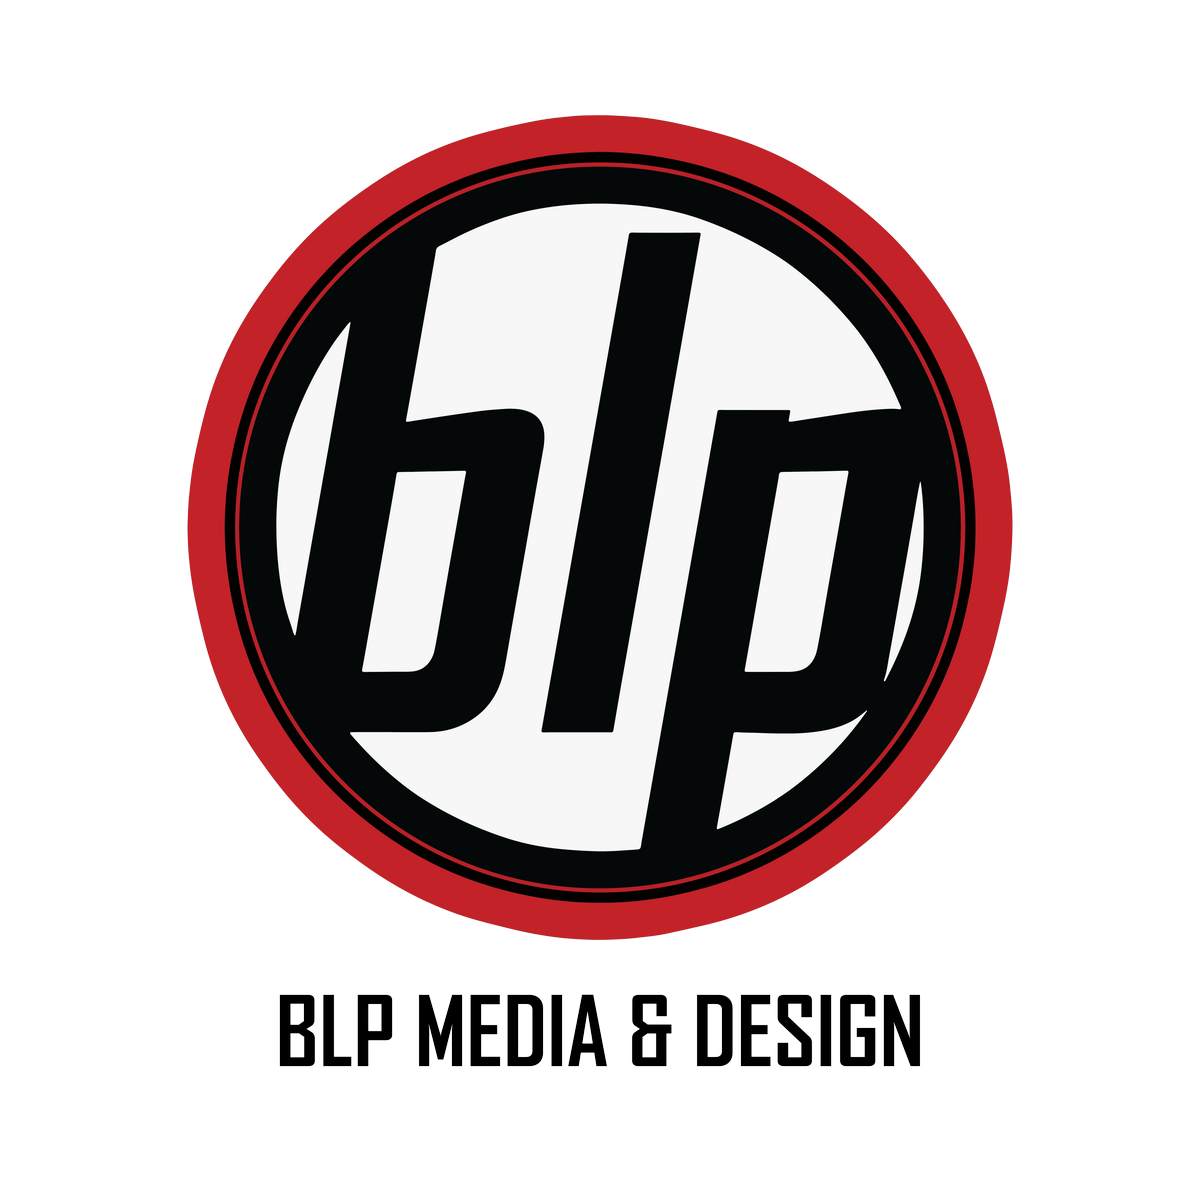 BLPmedia_logo_trans-bg_1200.png